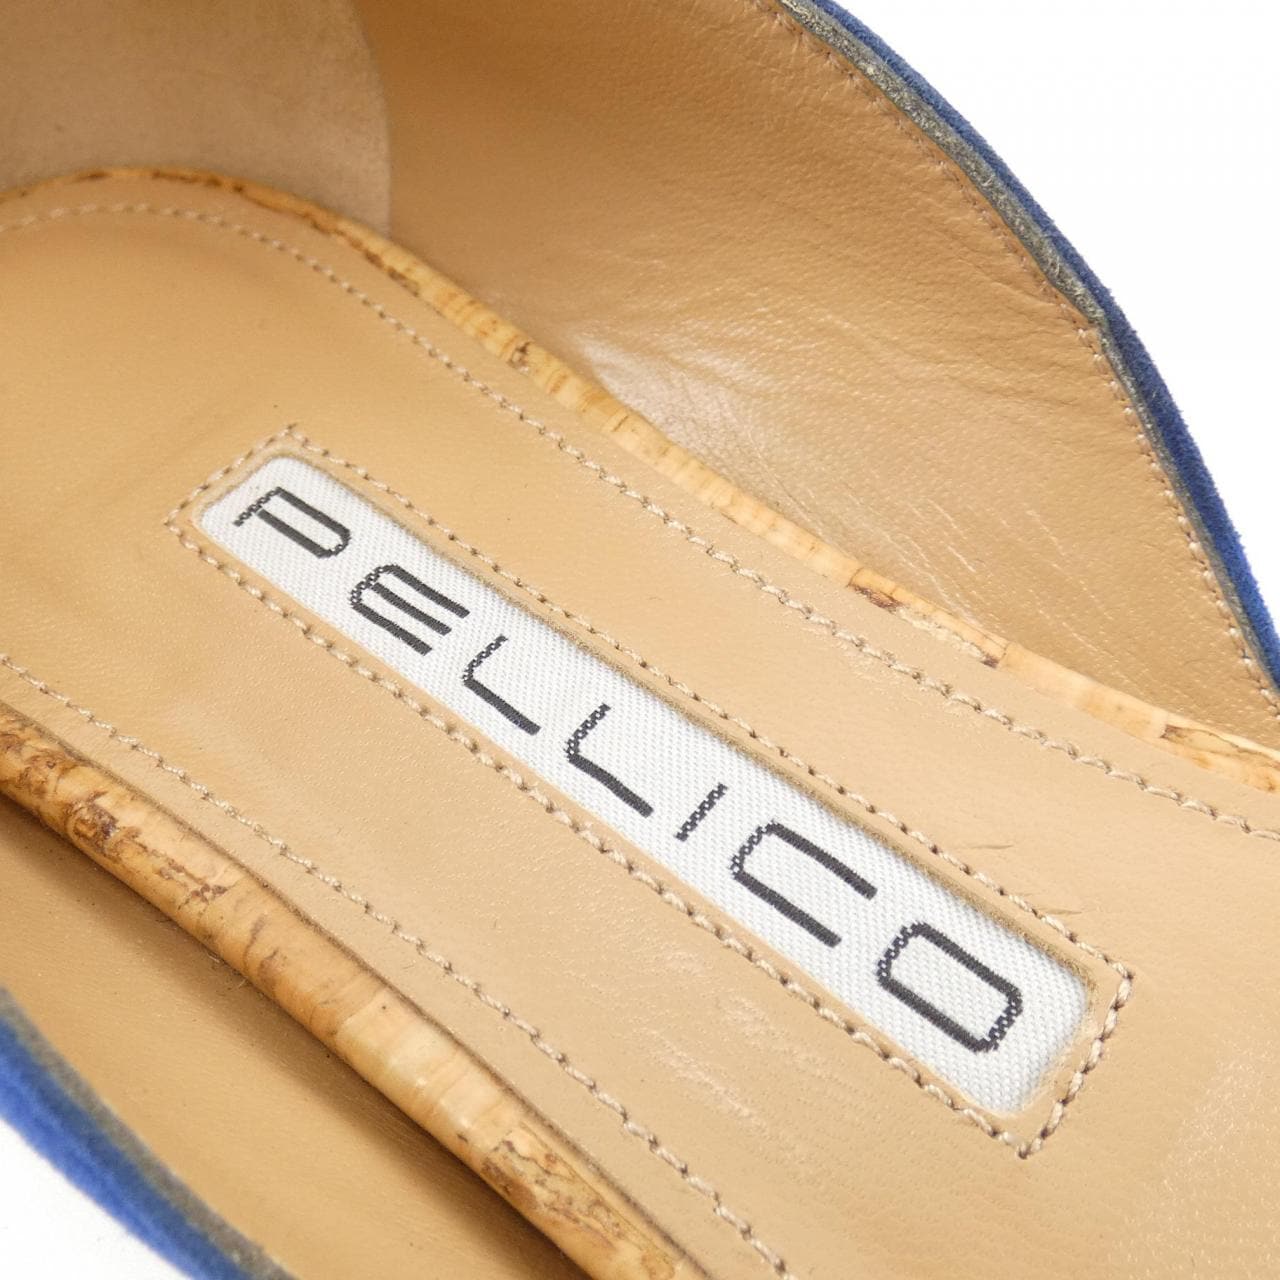 PELLICO shoes